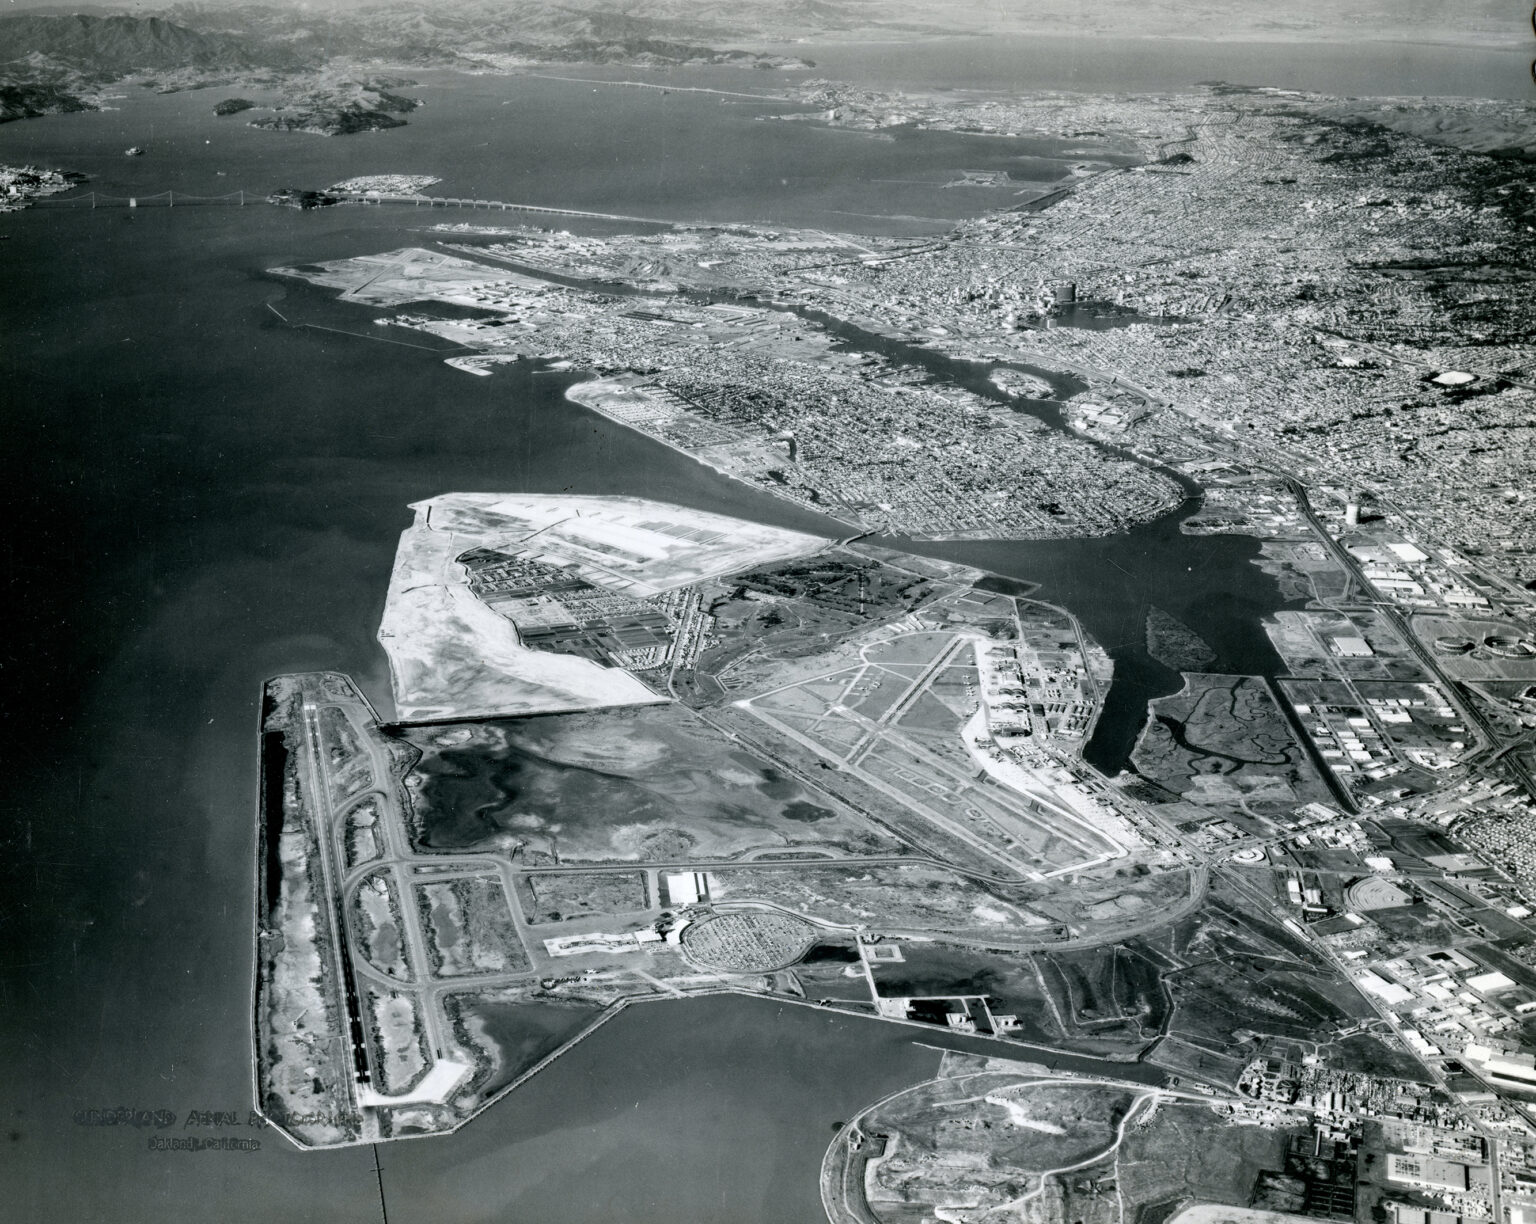 Alameda, Bay Farm Island, Oakland Airport, Dec. 26, 1969 – Alamedainfo